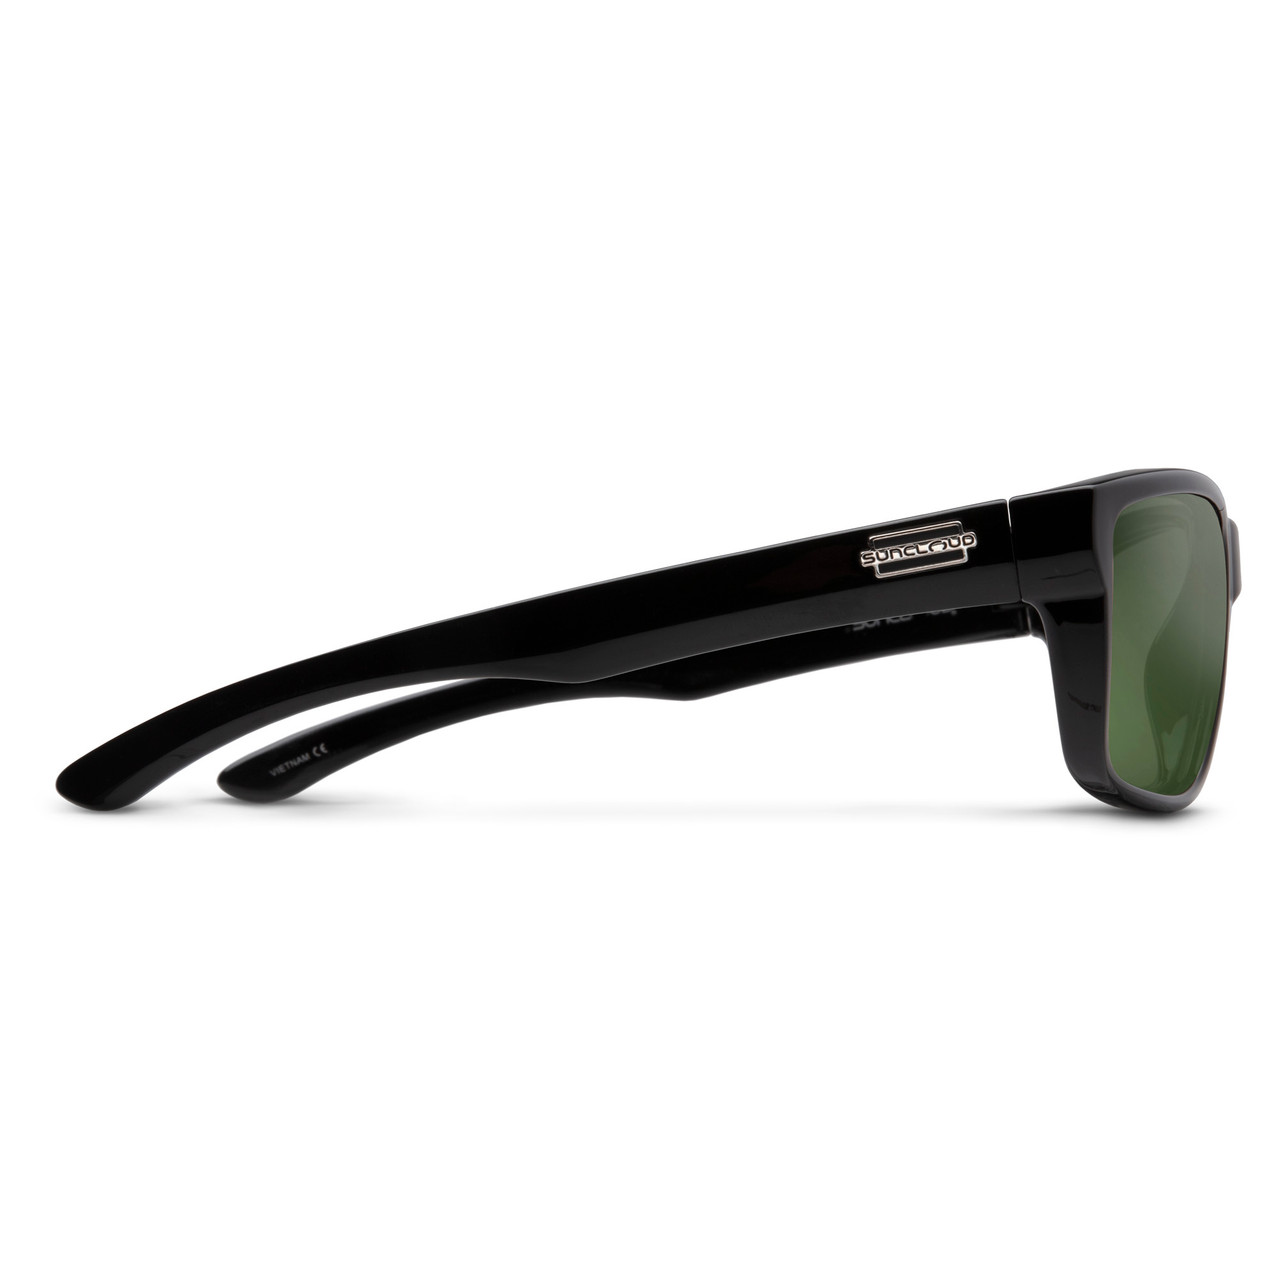 Share more than 270 suncloud polarized sunglasses